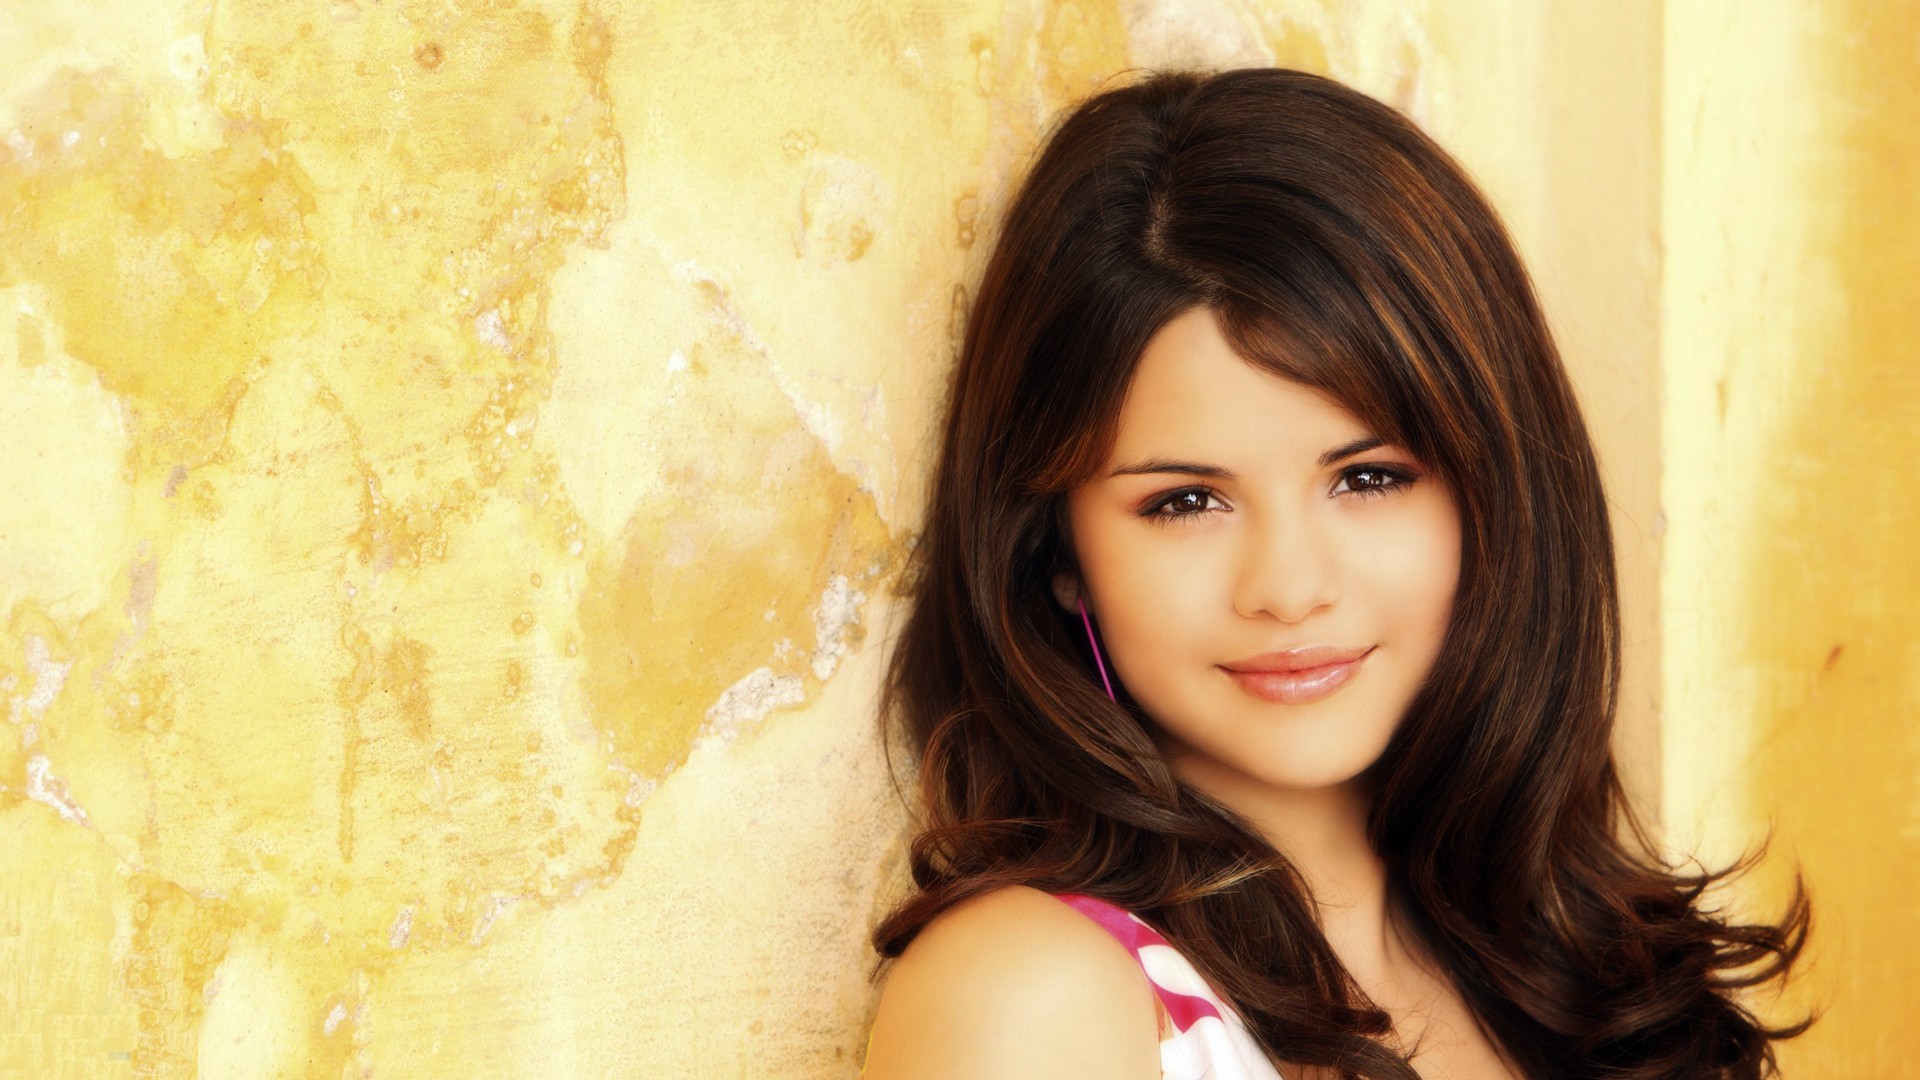 Backgrounds Selena Gomez Wallpaper High Quality